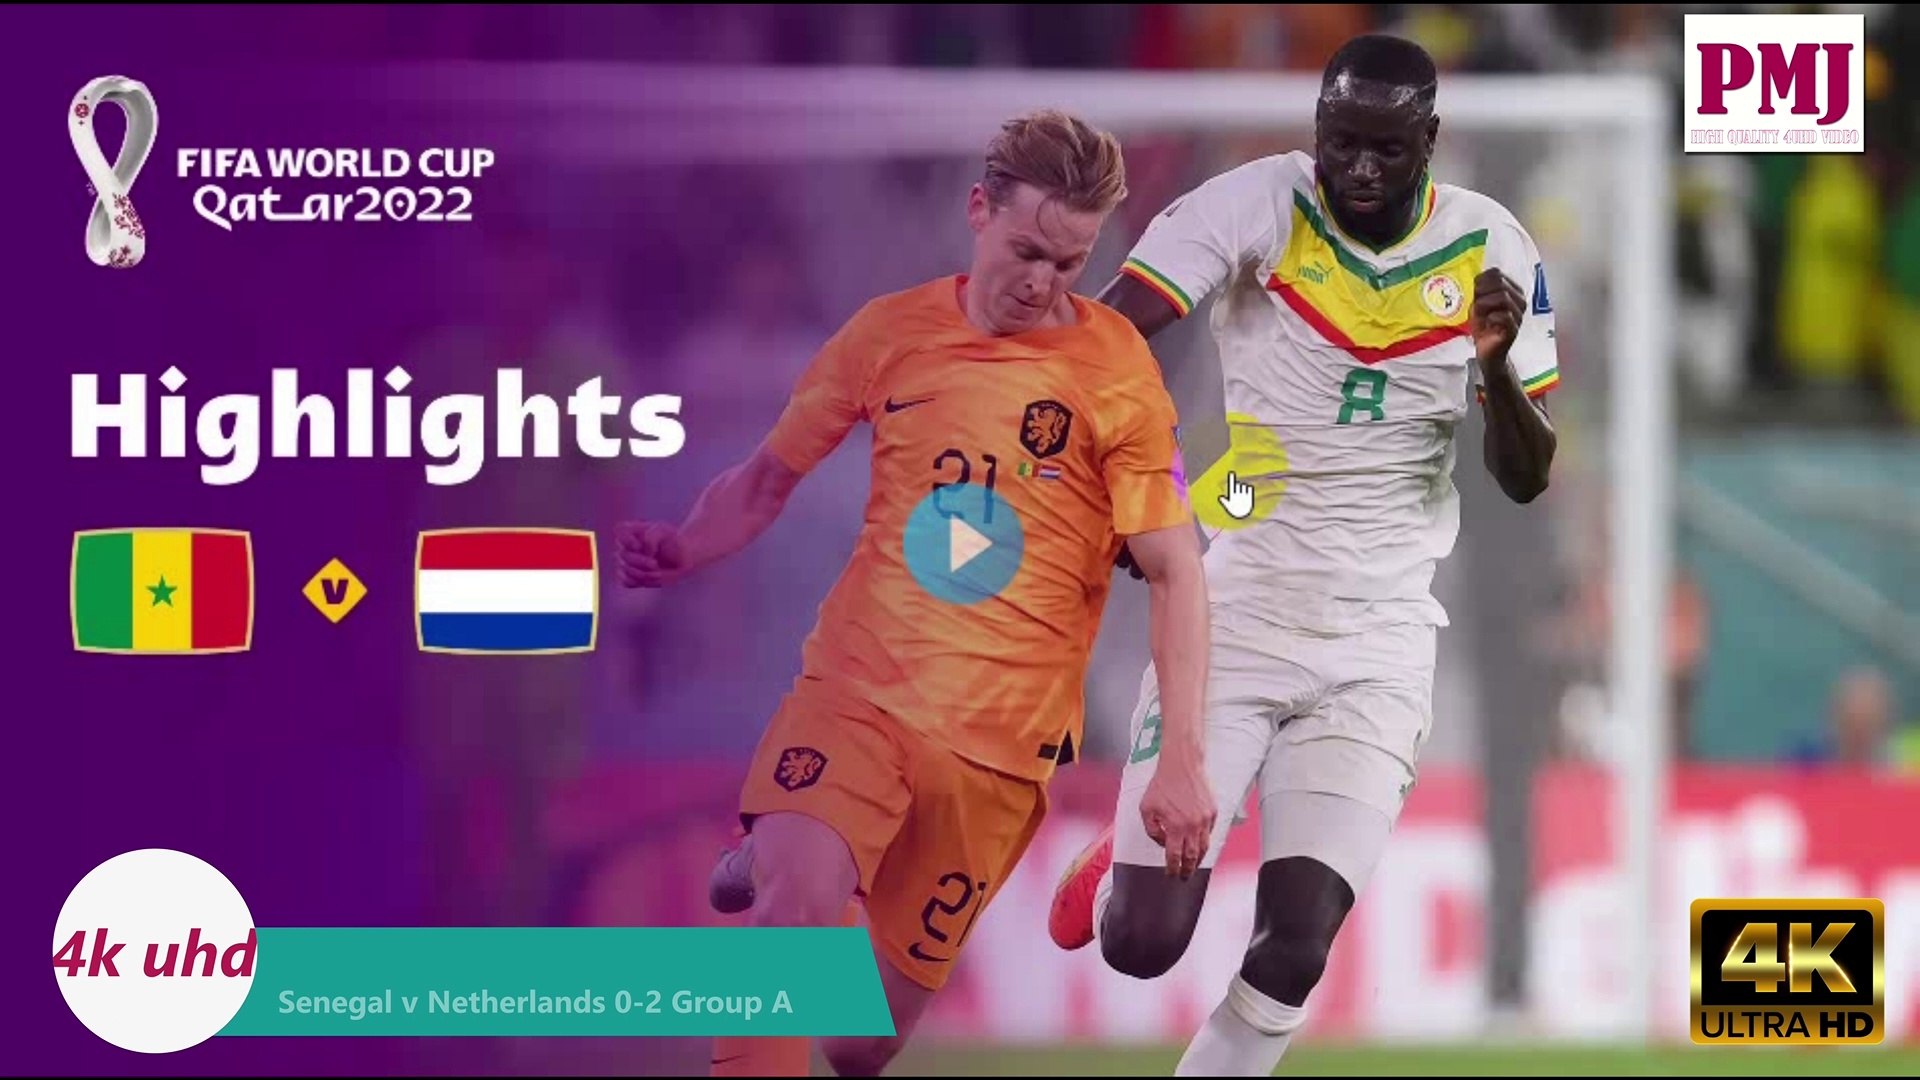 Senegal v Netherlands Group A FIFA World Cup Qatar 2022™ Highlights,4k uhd